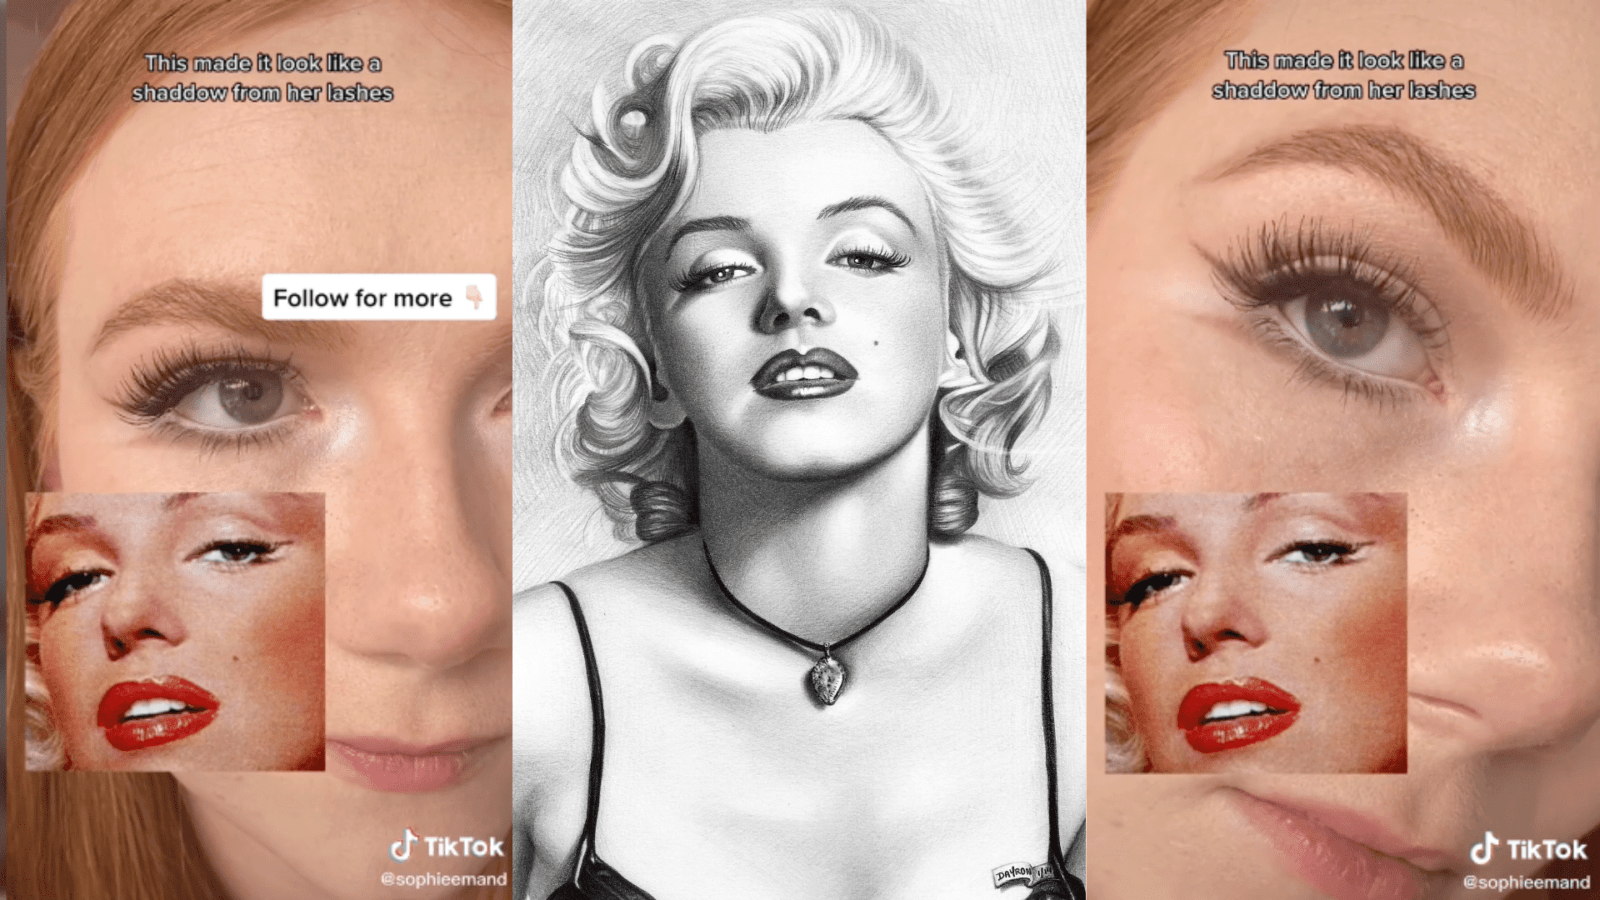 How Redheads Can Fake Thick, Long Eyelashes Like Marilyn Monroe